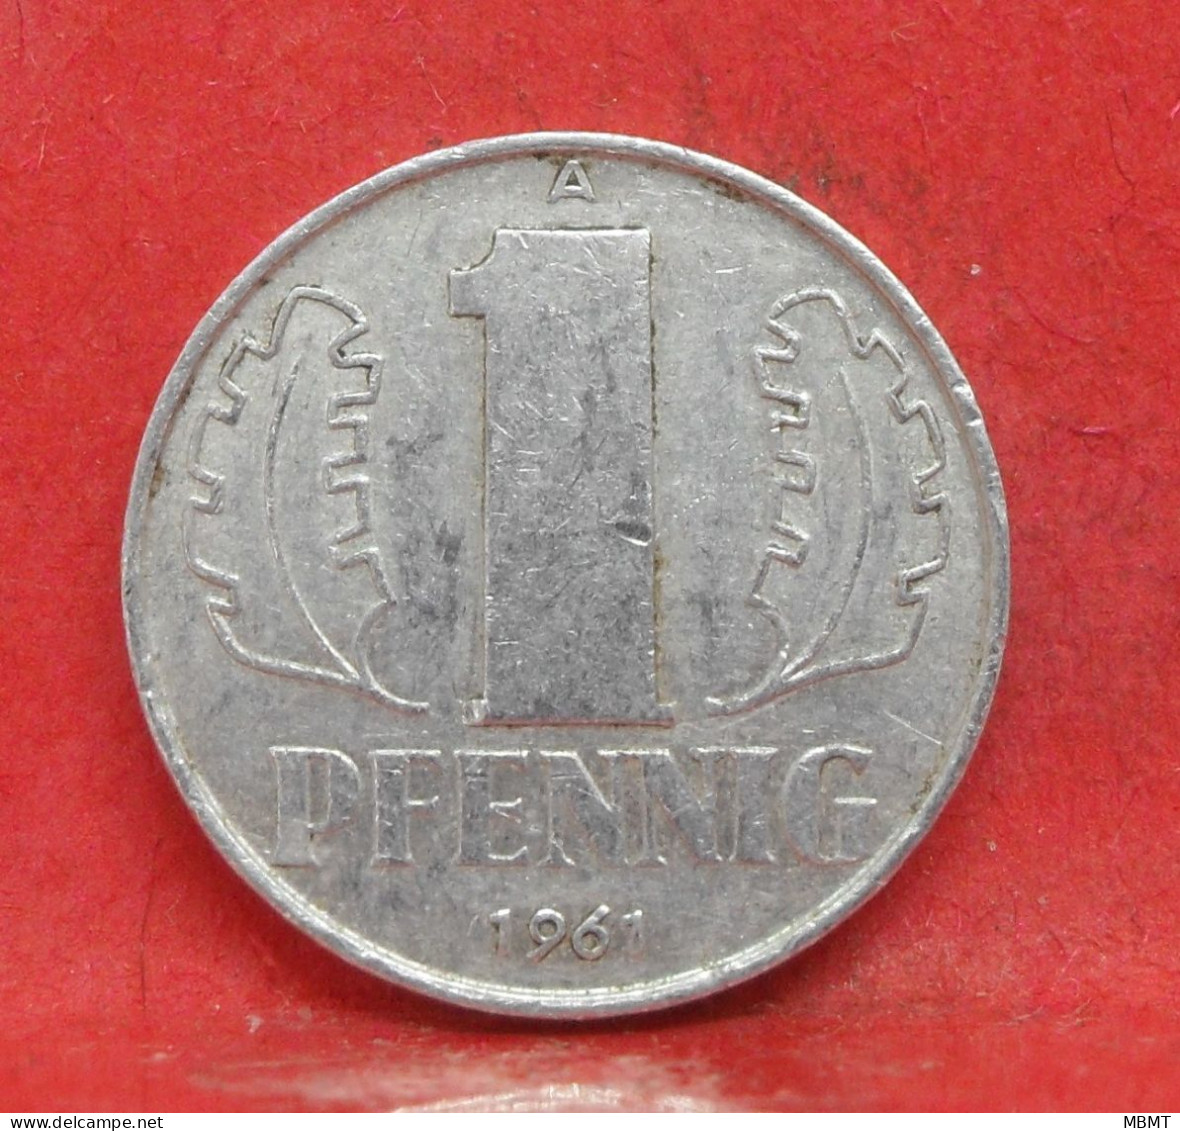 1 Pfennig 1961 A - TTB - Pièce Monnaie Allemagne - Article N°1285 - 1 Pfennig